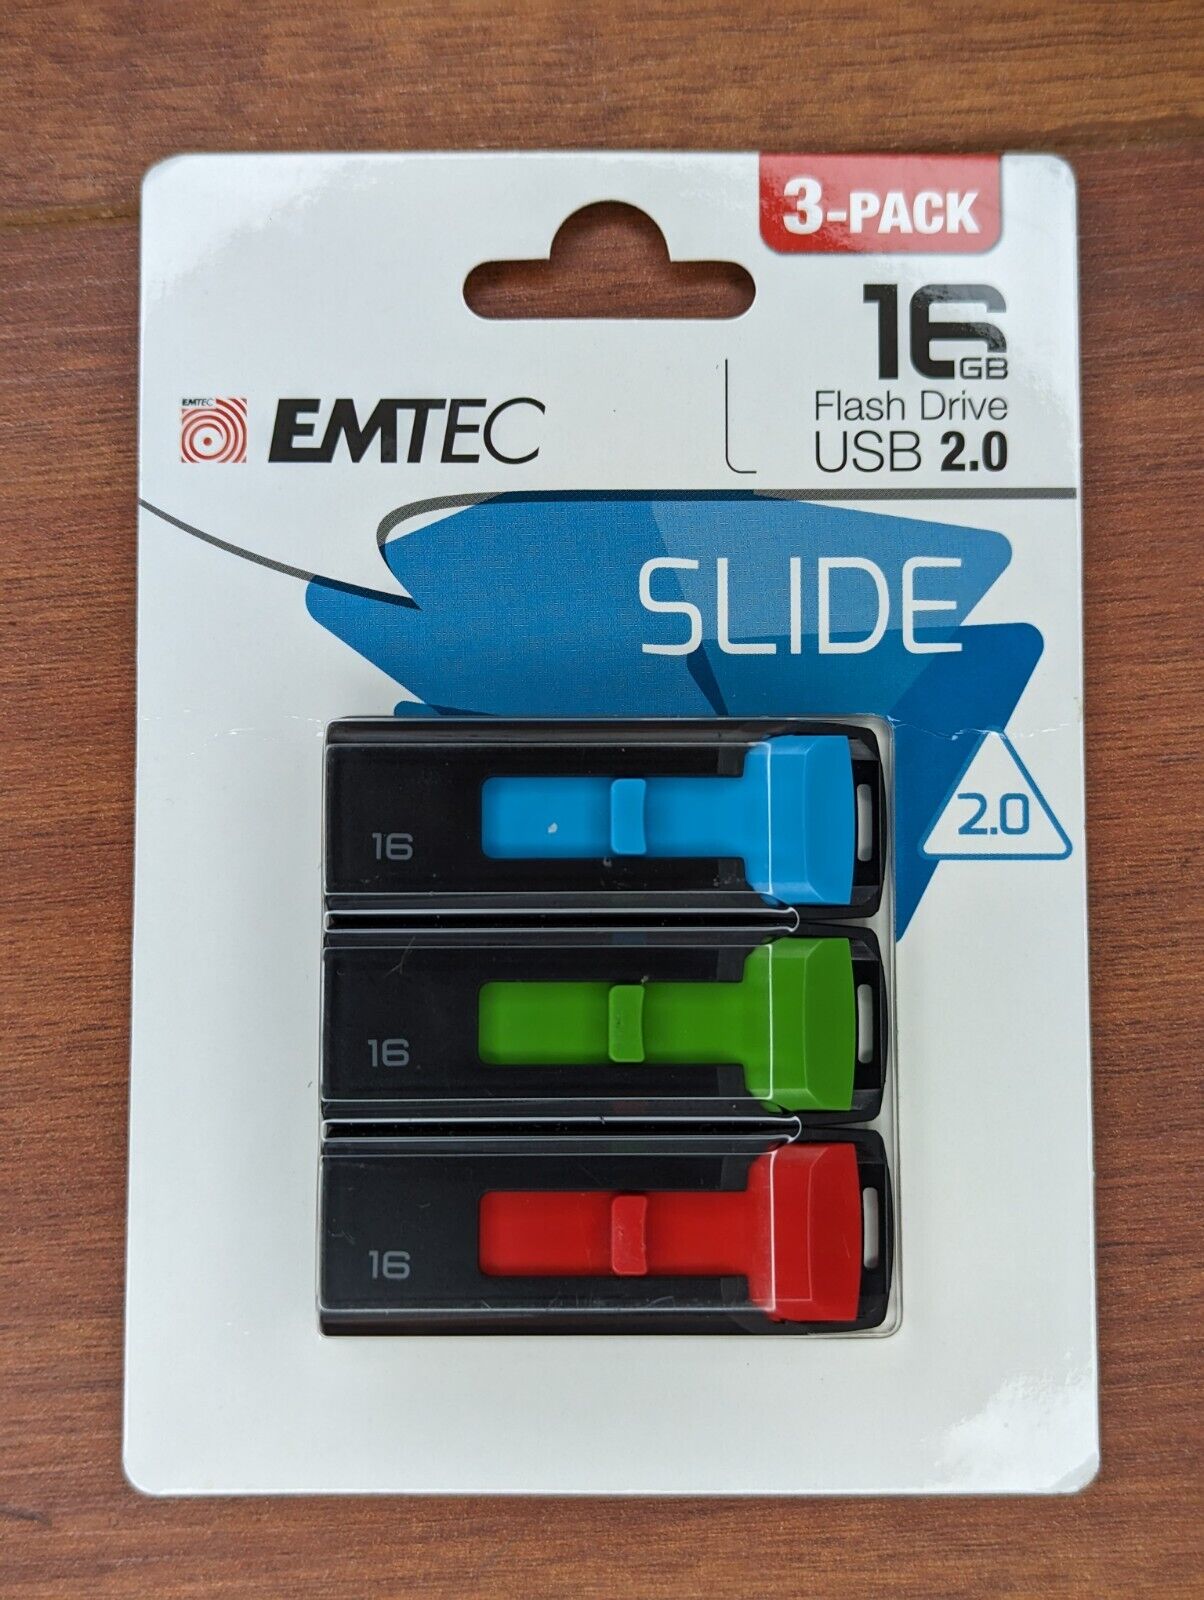 EMTEC SLIDE FLASH DRIVE 3 Pack USB 2.0 16 GB BLUE, GREEN, RED BRAND NEW SEALED